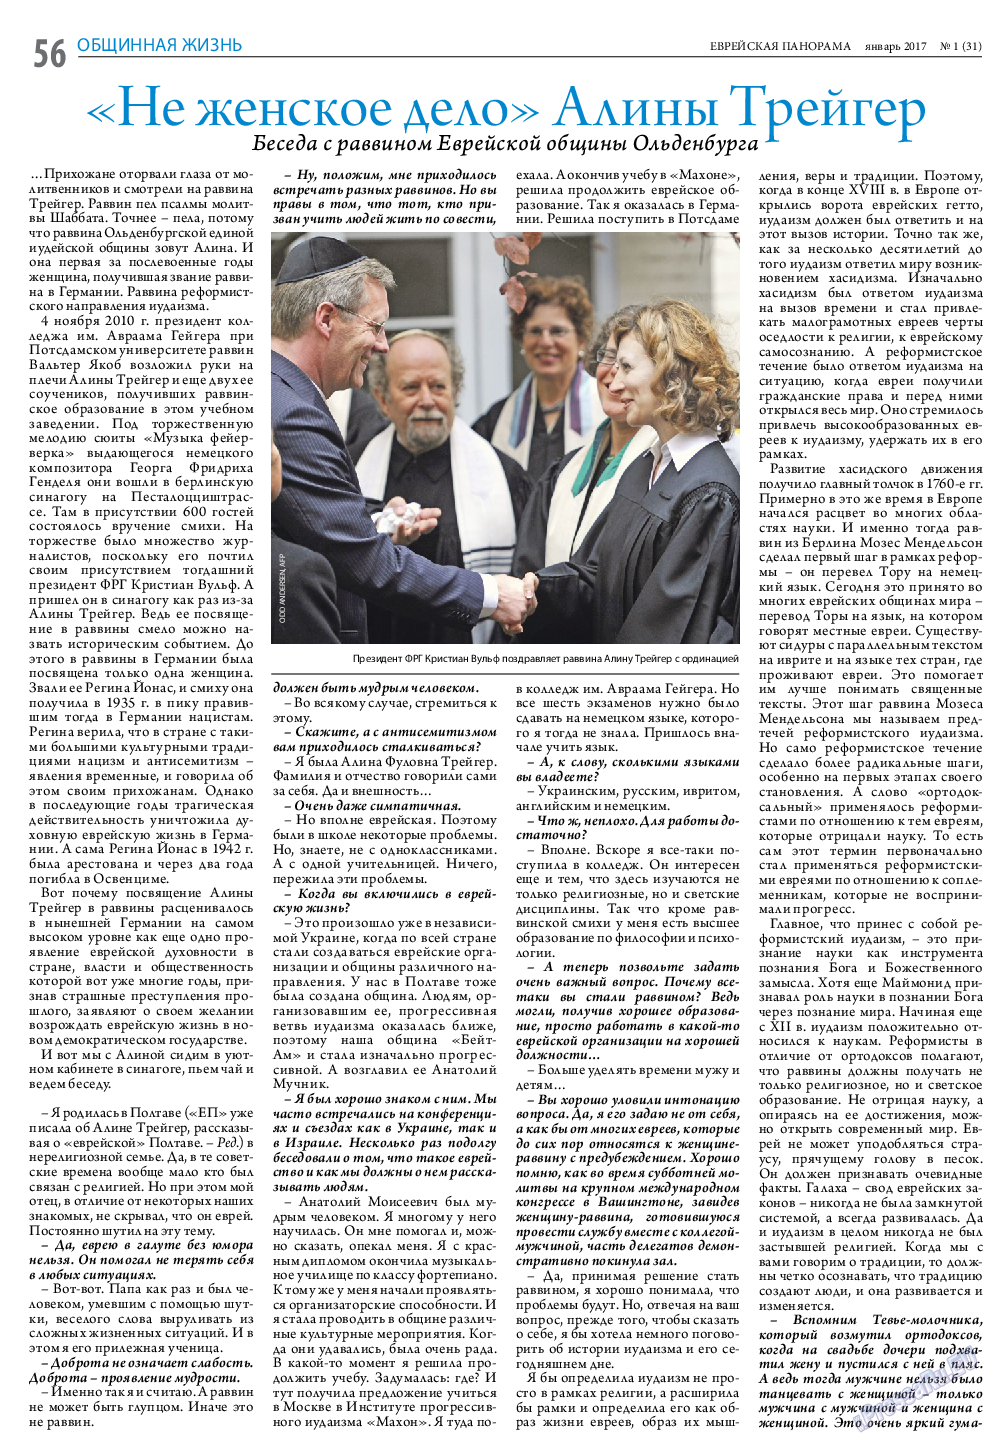 Еврейская панорама, газета. 2017 №1 стр.56